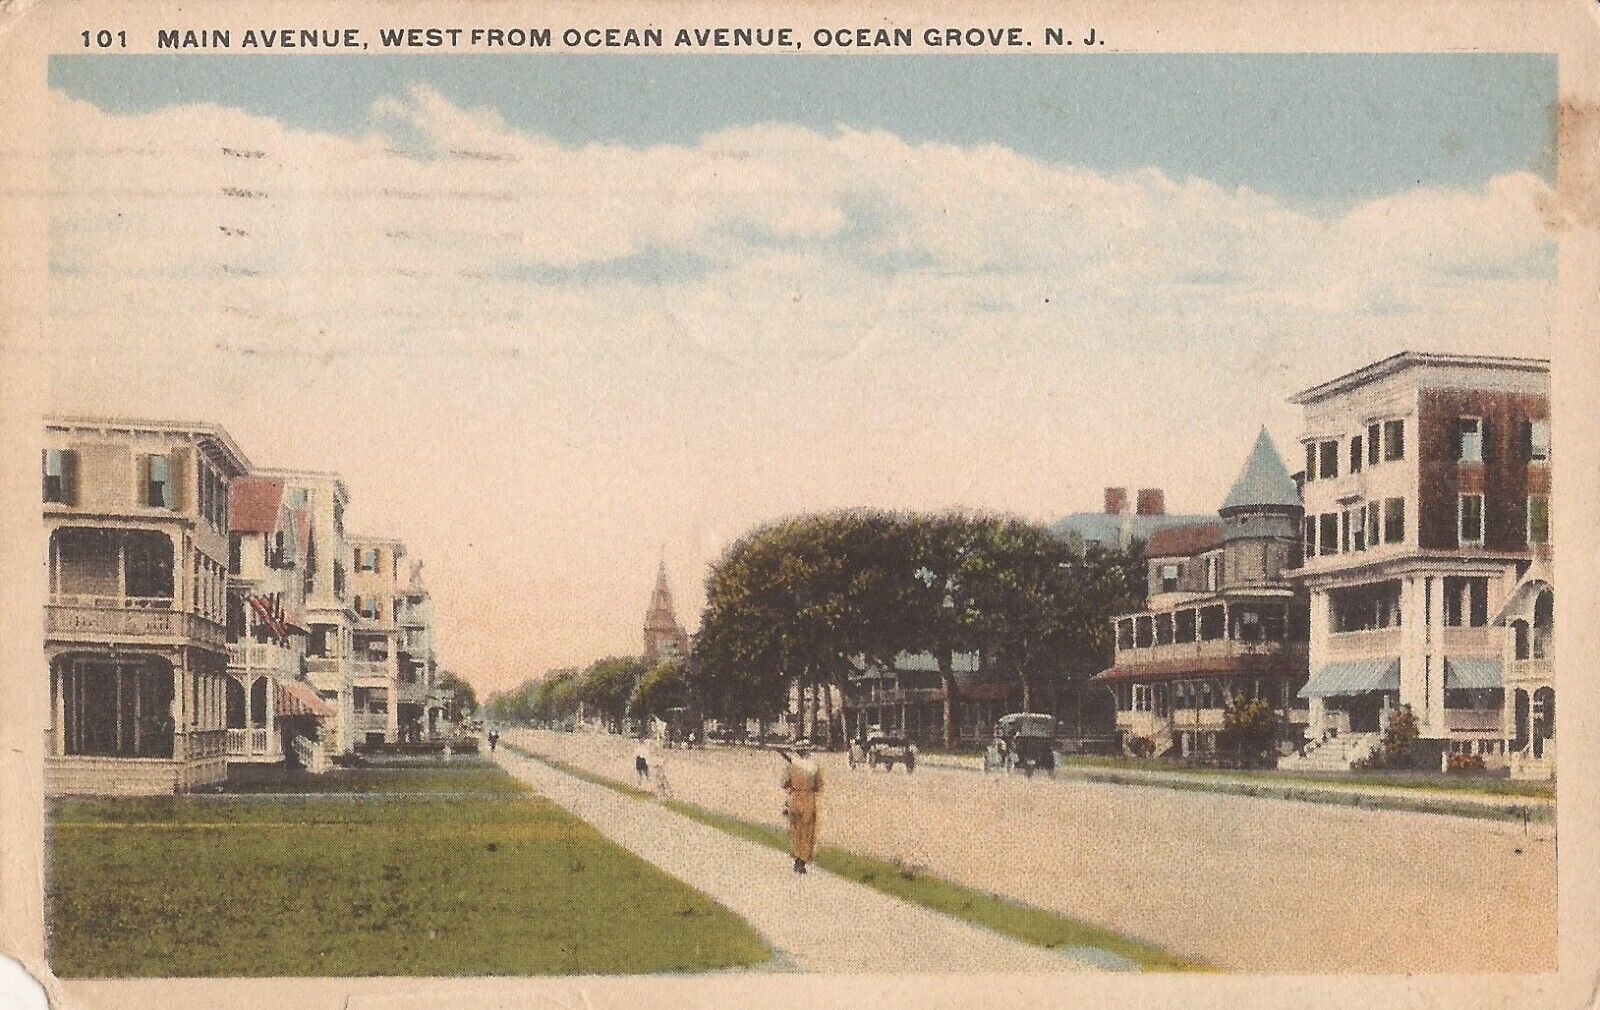 Ocean Grove, NEW JERSEY - Main Avenue - 1922